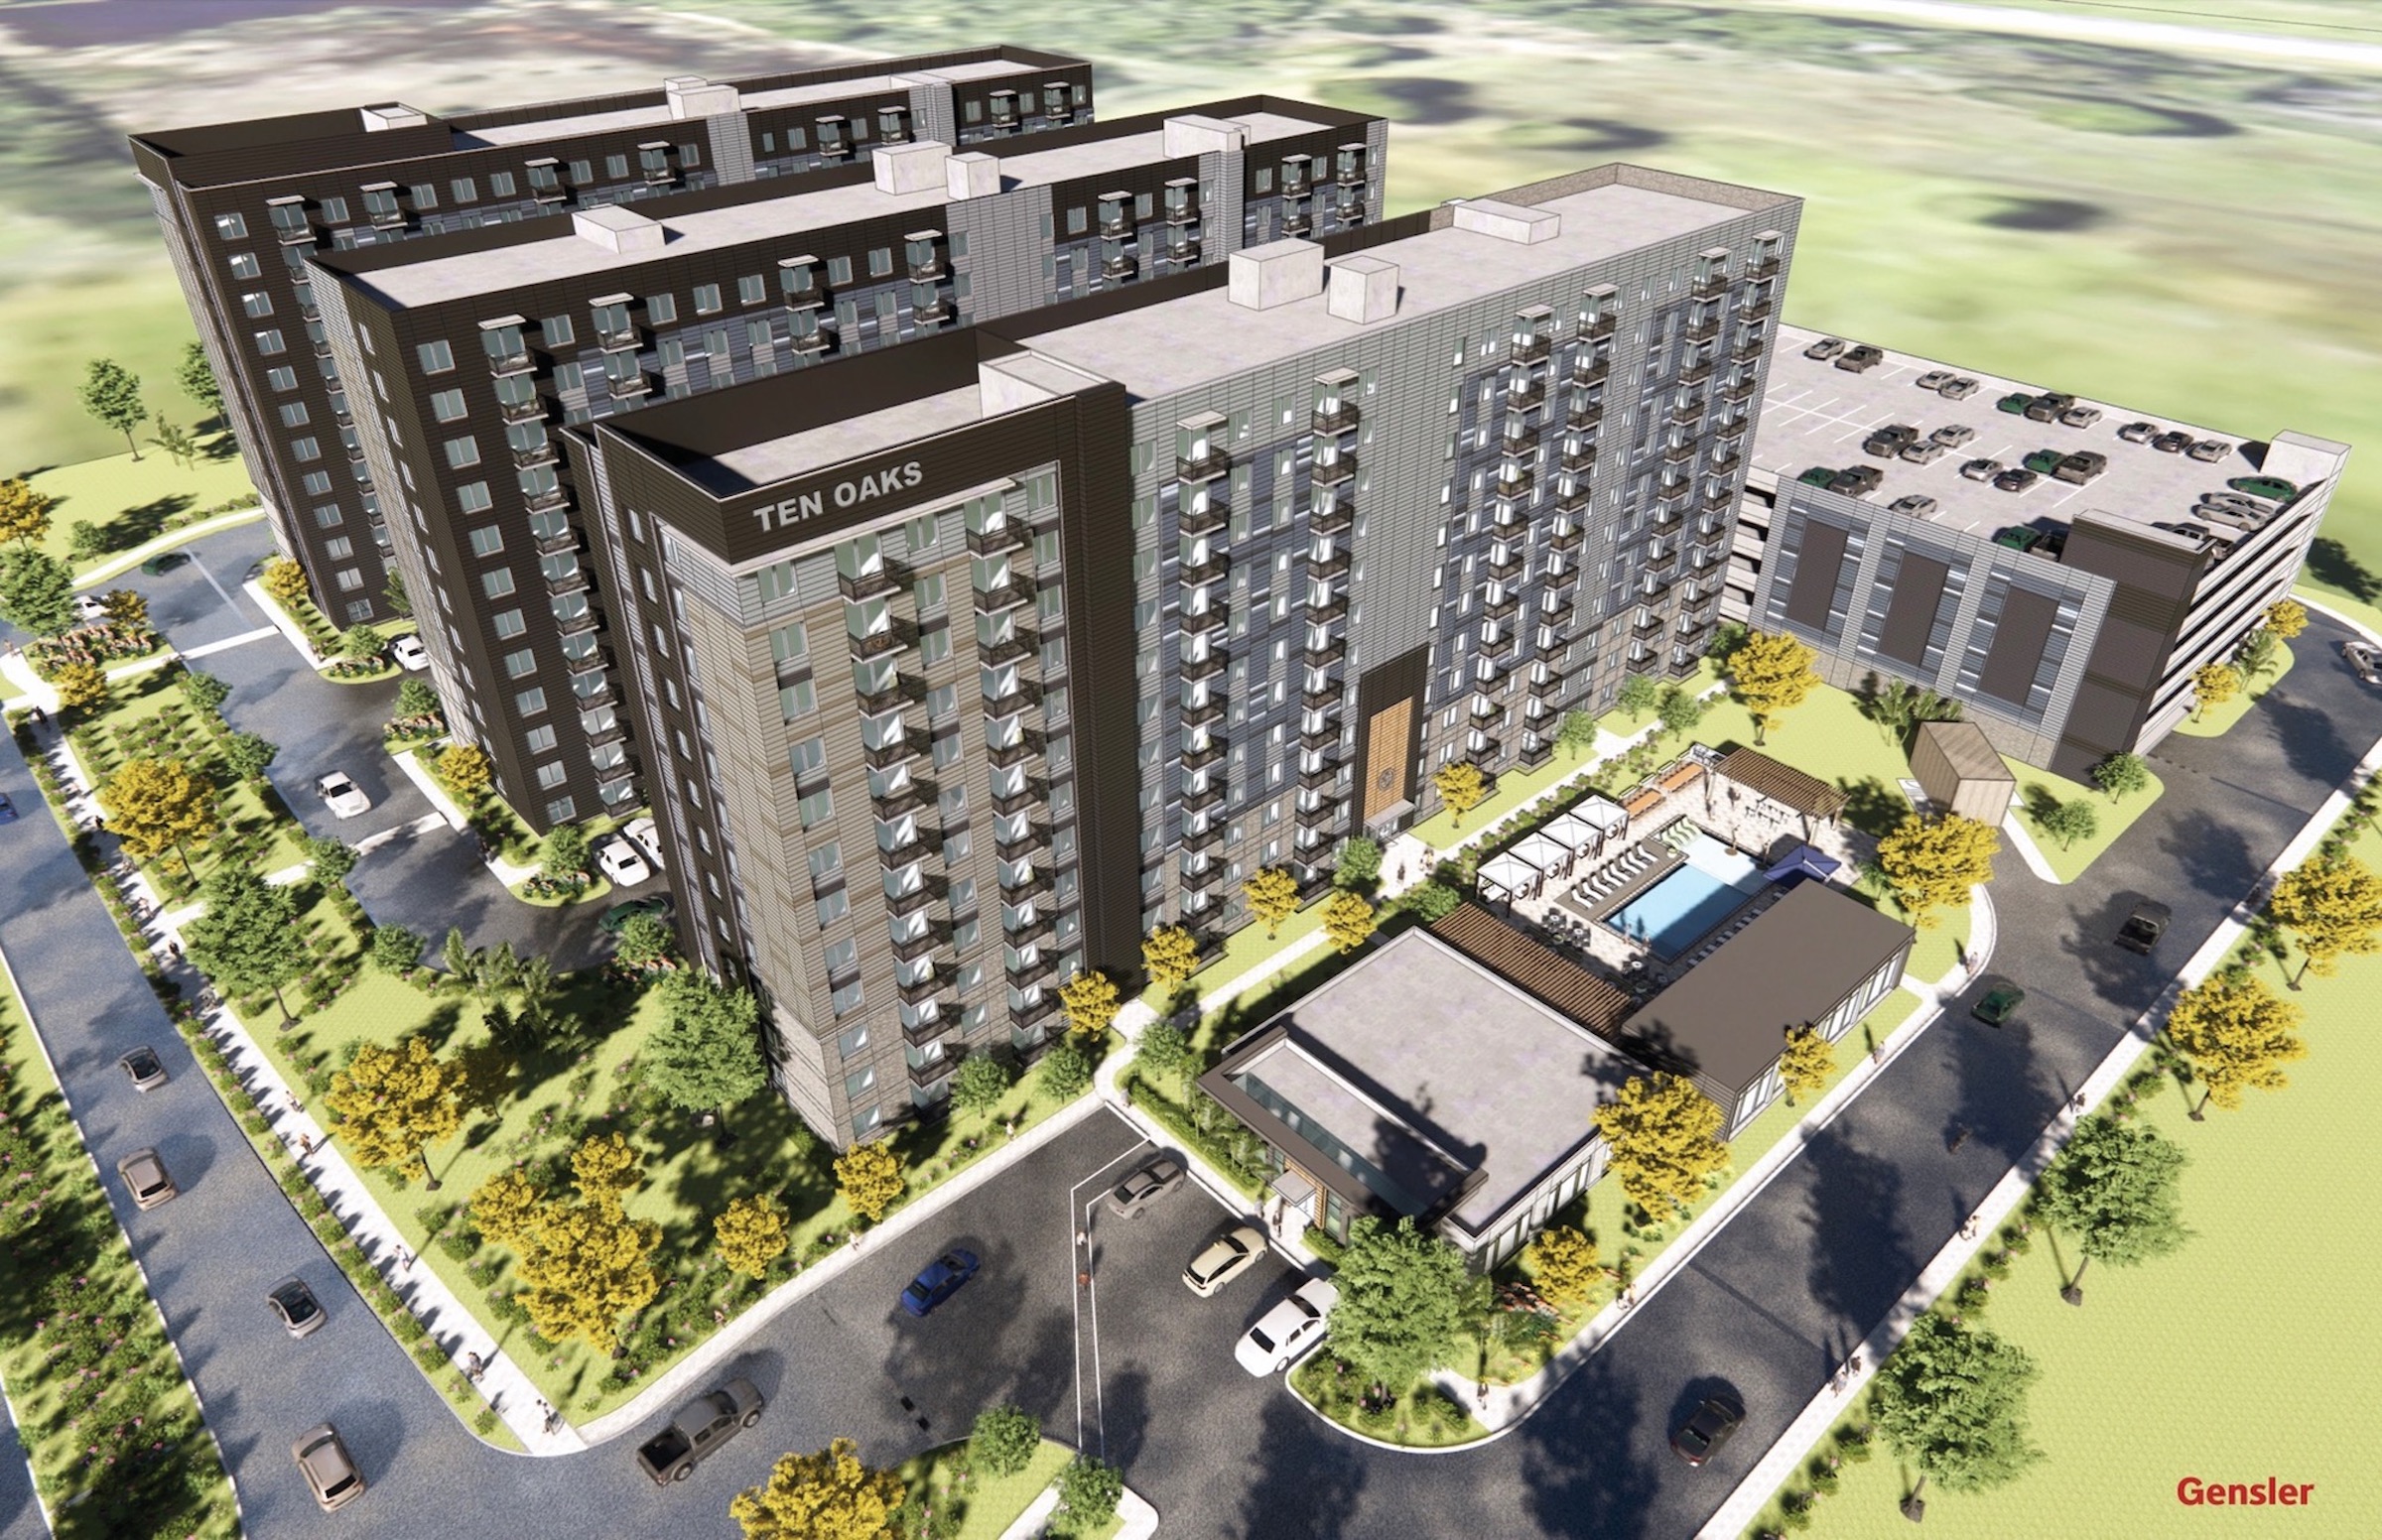 Ten Oaks, a 12-story multifamily development near Houston designed by Gensler,